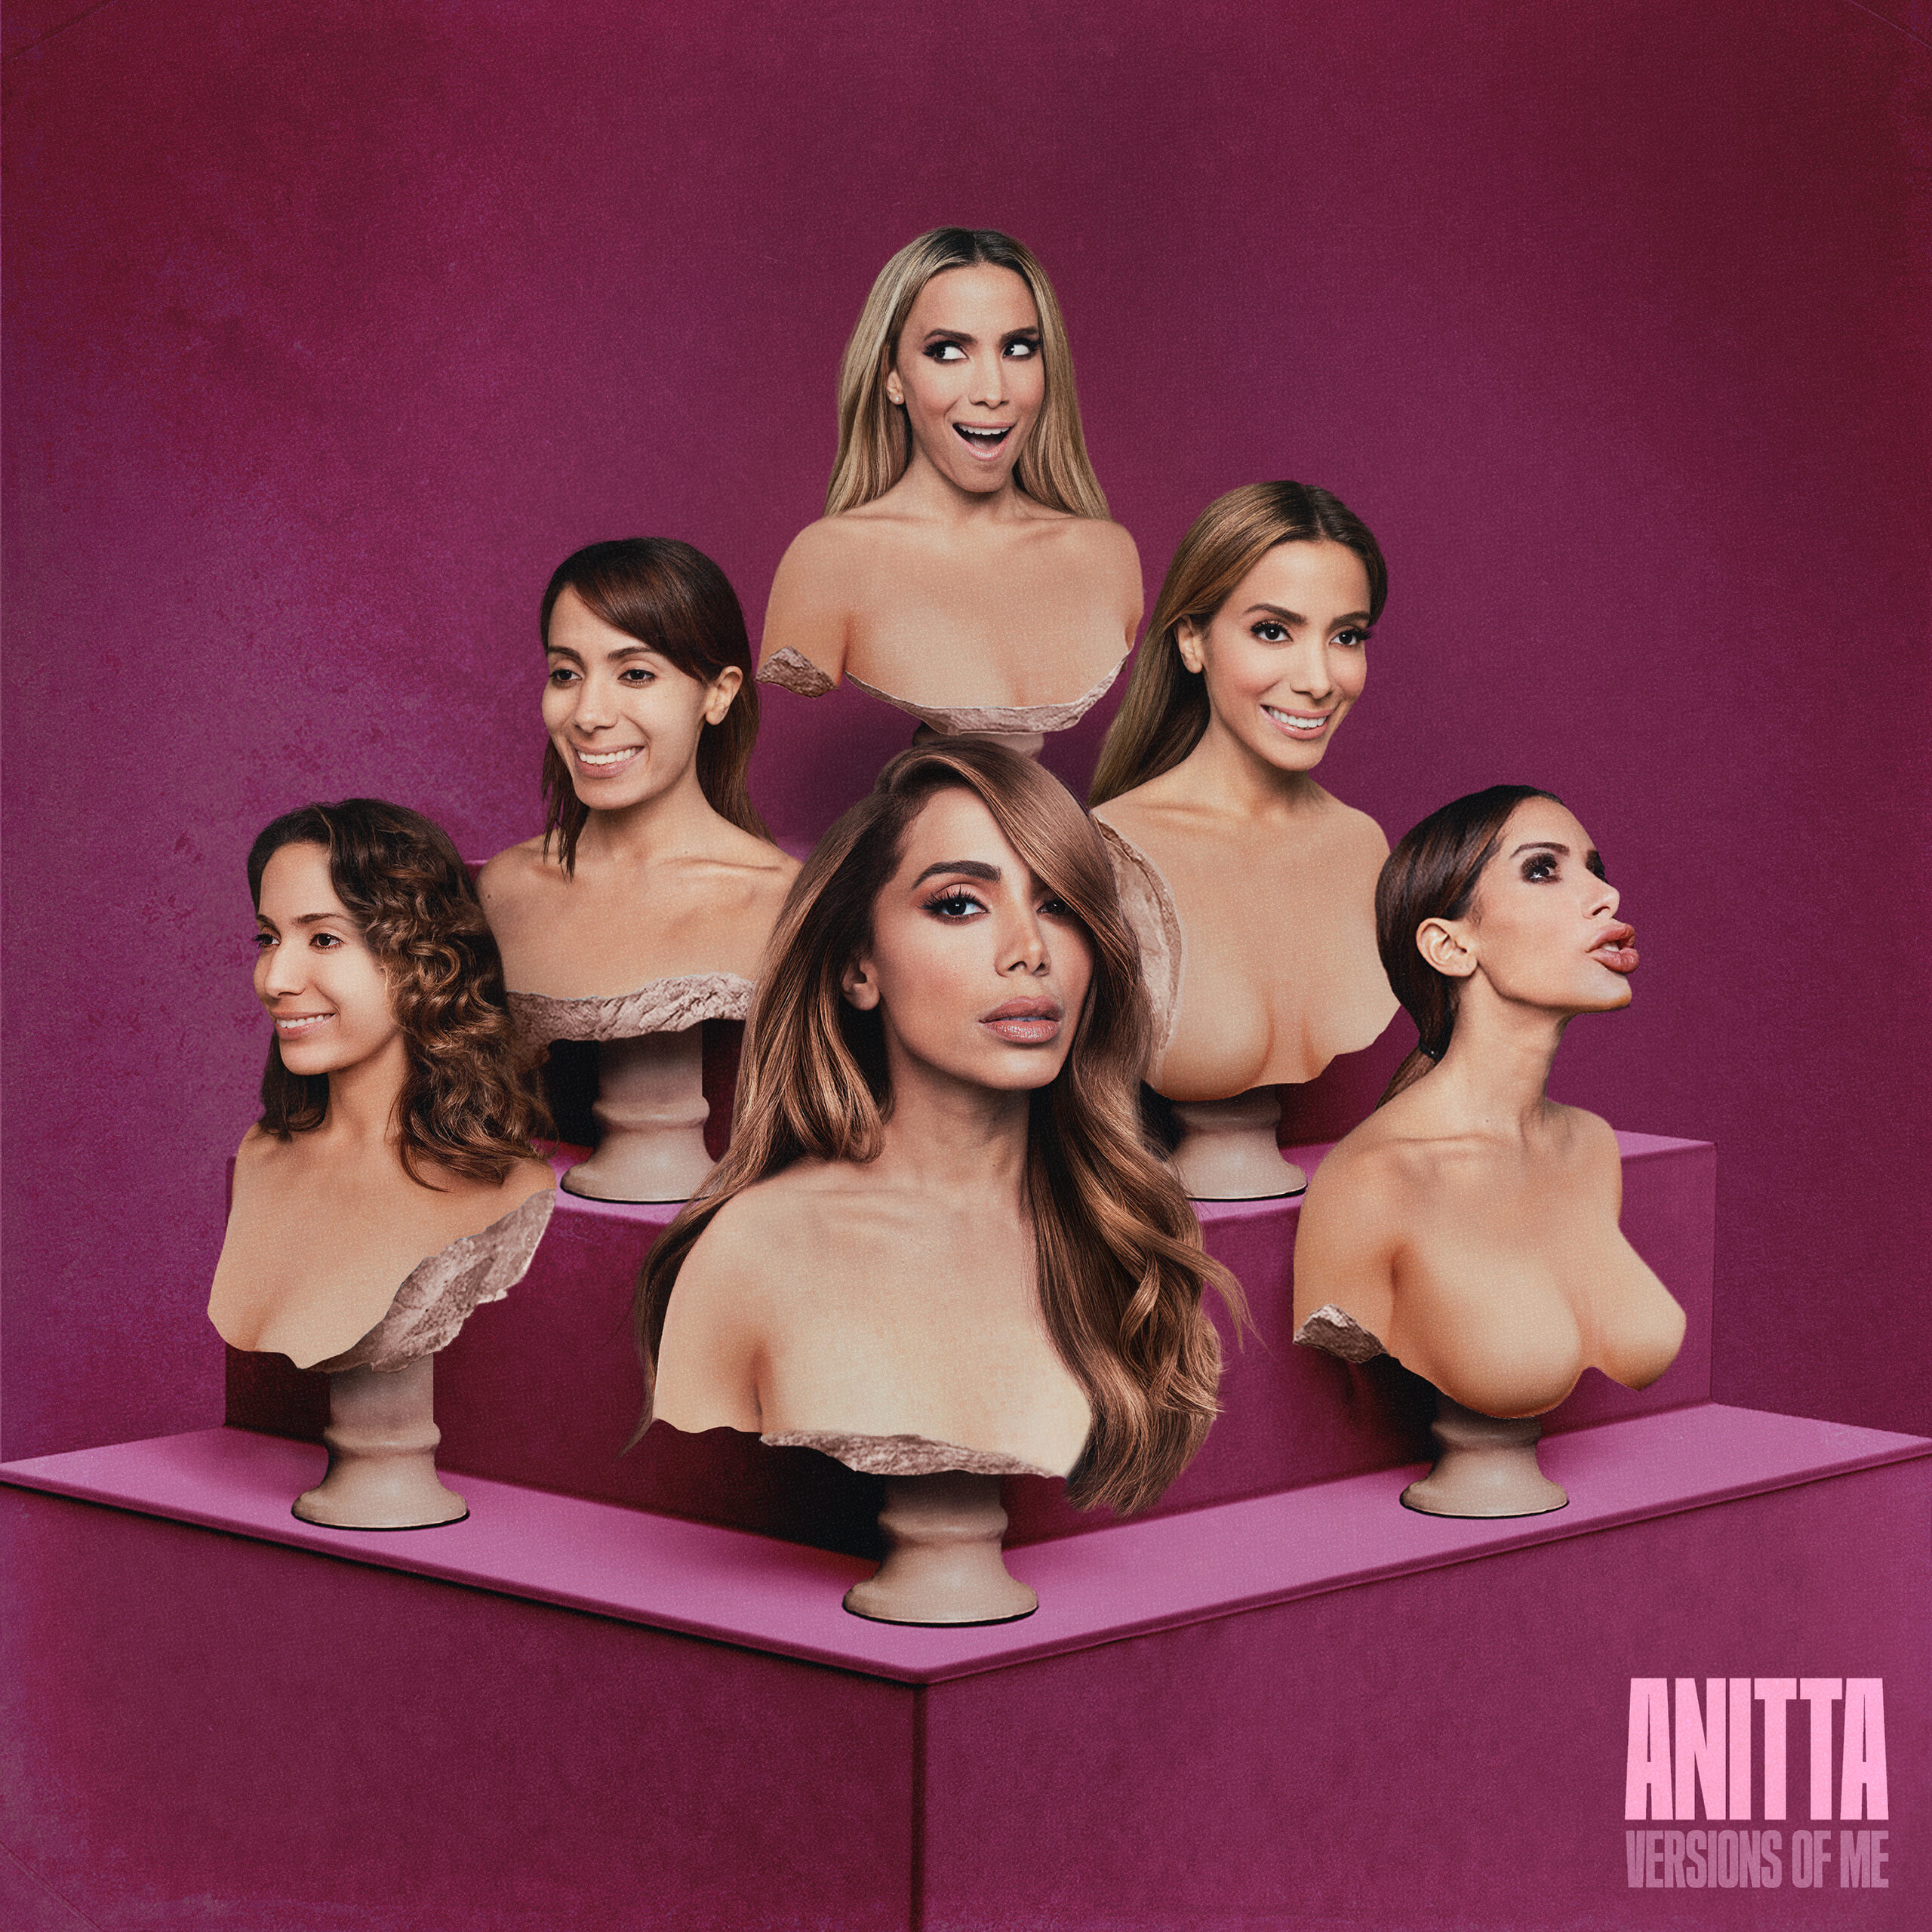 ANITTA lanza su nuevo disco “Versions of Me”